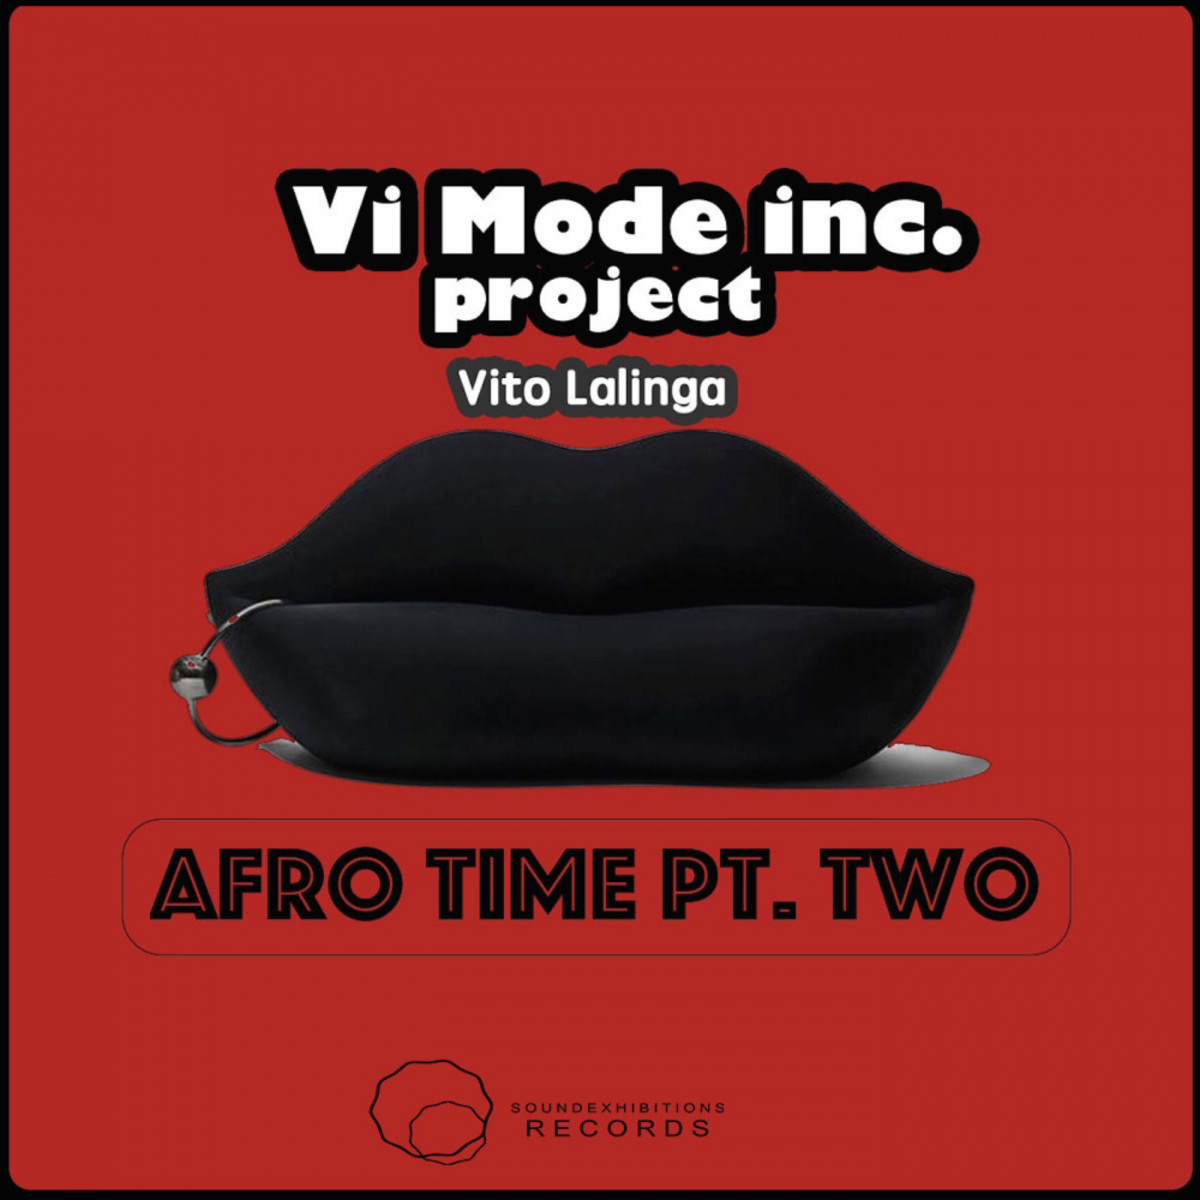 Vito Lalinga (Vi Mode Inc. Project) - Afro Time, Pt. 2 / Sound-Exhibitions-Records